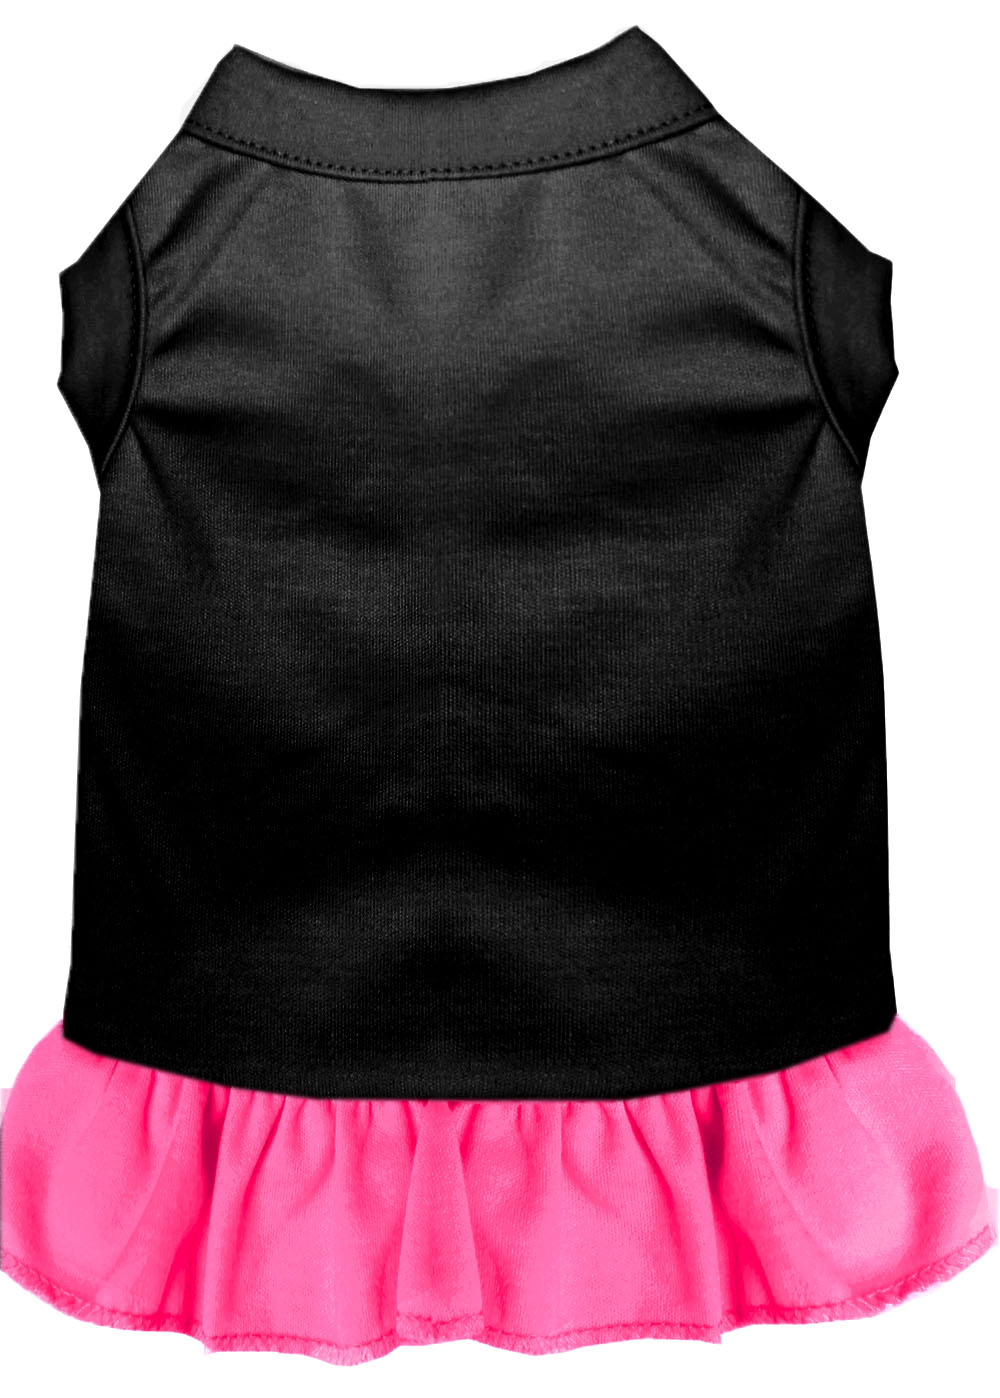 Plain Pet Dress Black with Bright Pink XL